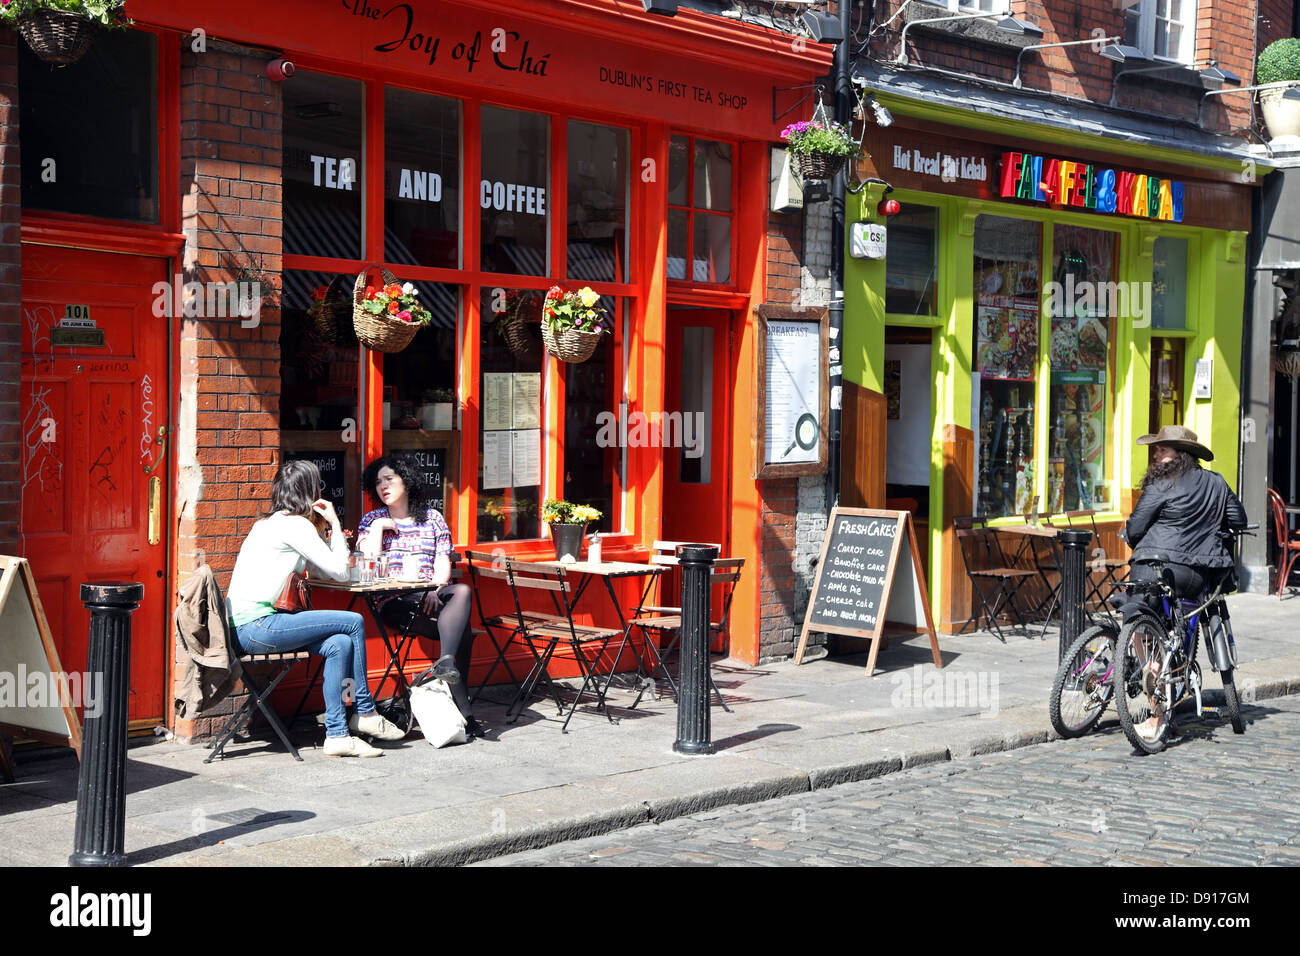 summer day, Essex Street, Temple Bar, Dublin's Left Bank quarter, Ireland Stock Photo